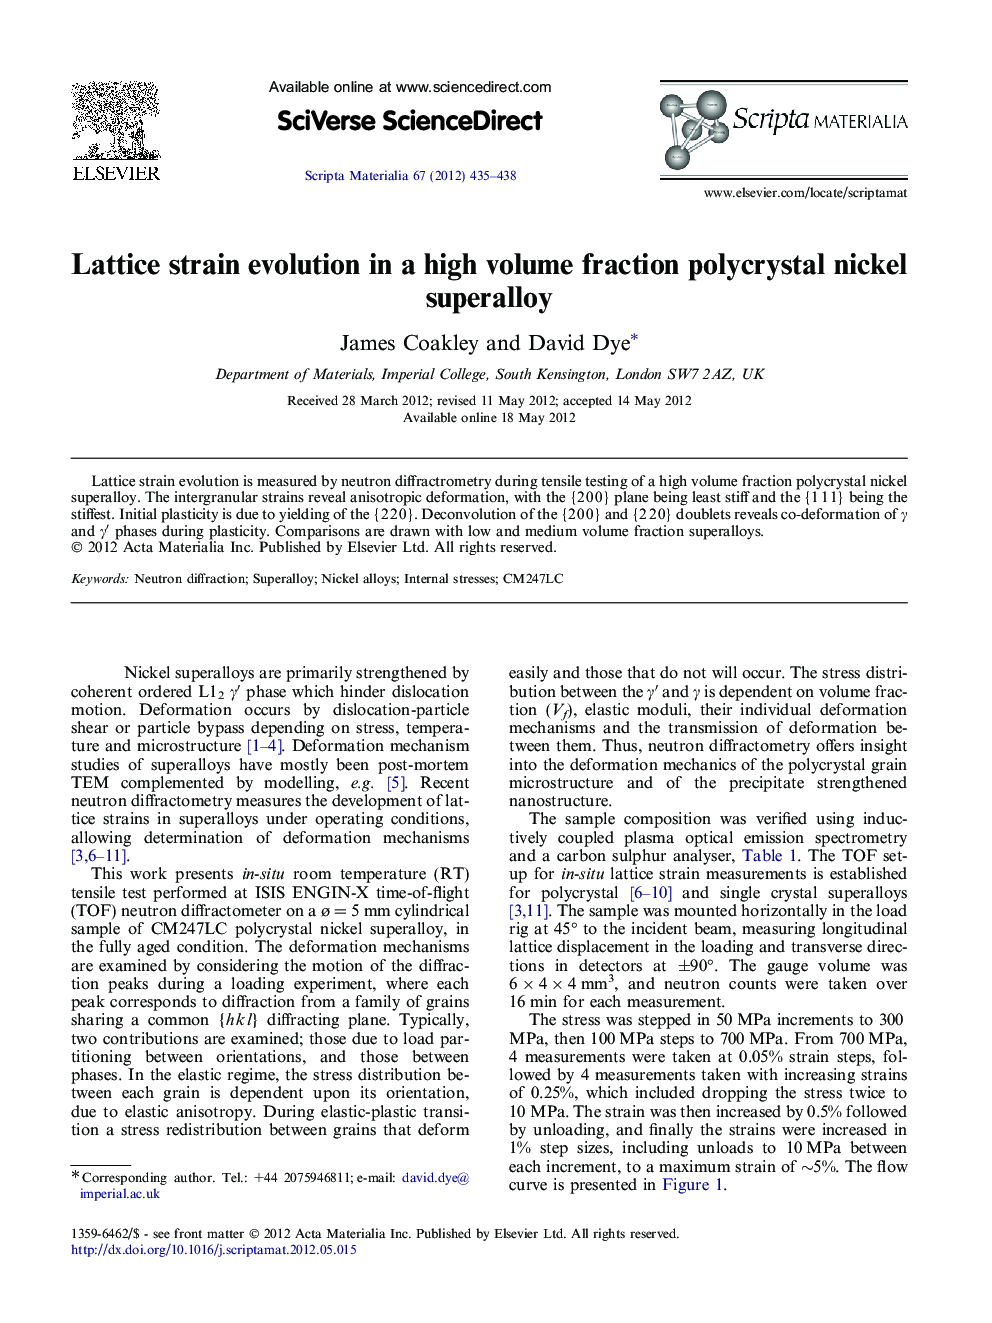 Lattice strain evolution in a high volume fraction polycrystal nickel superalloy